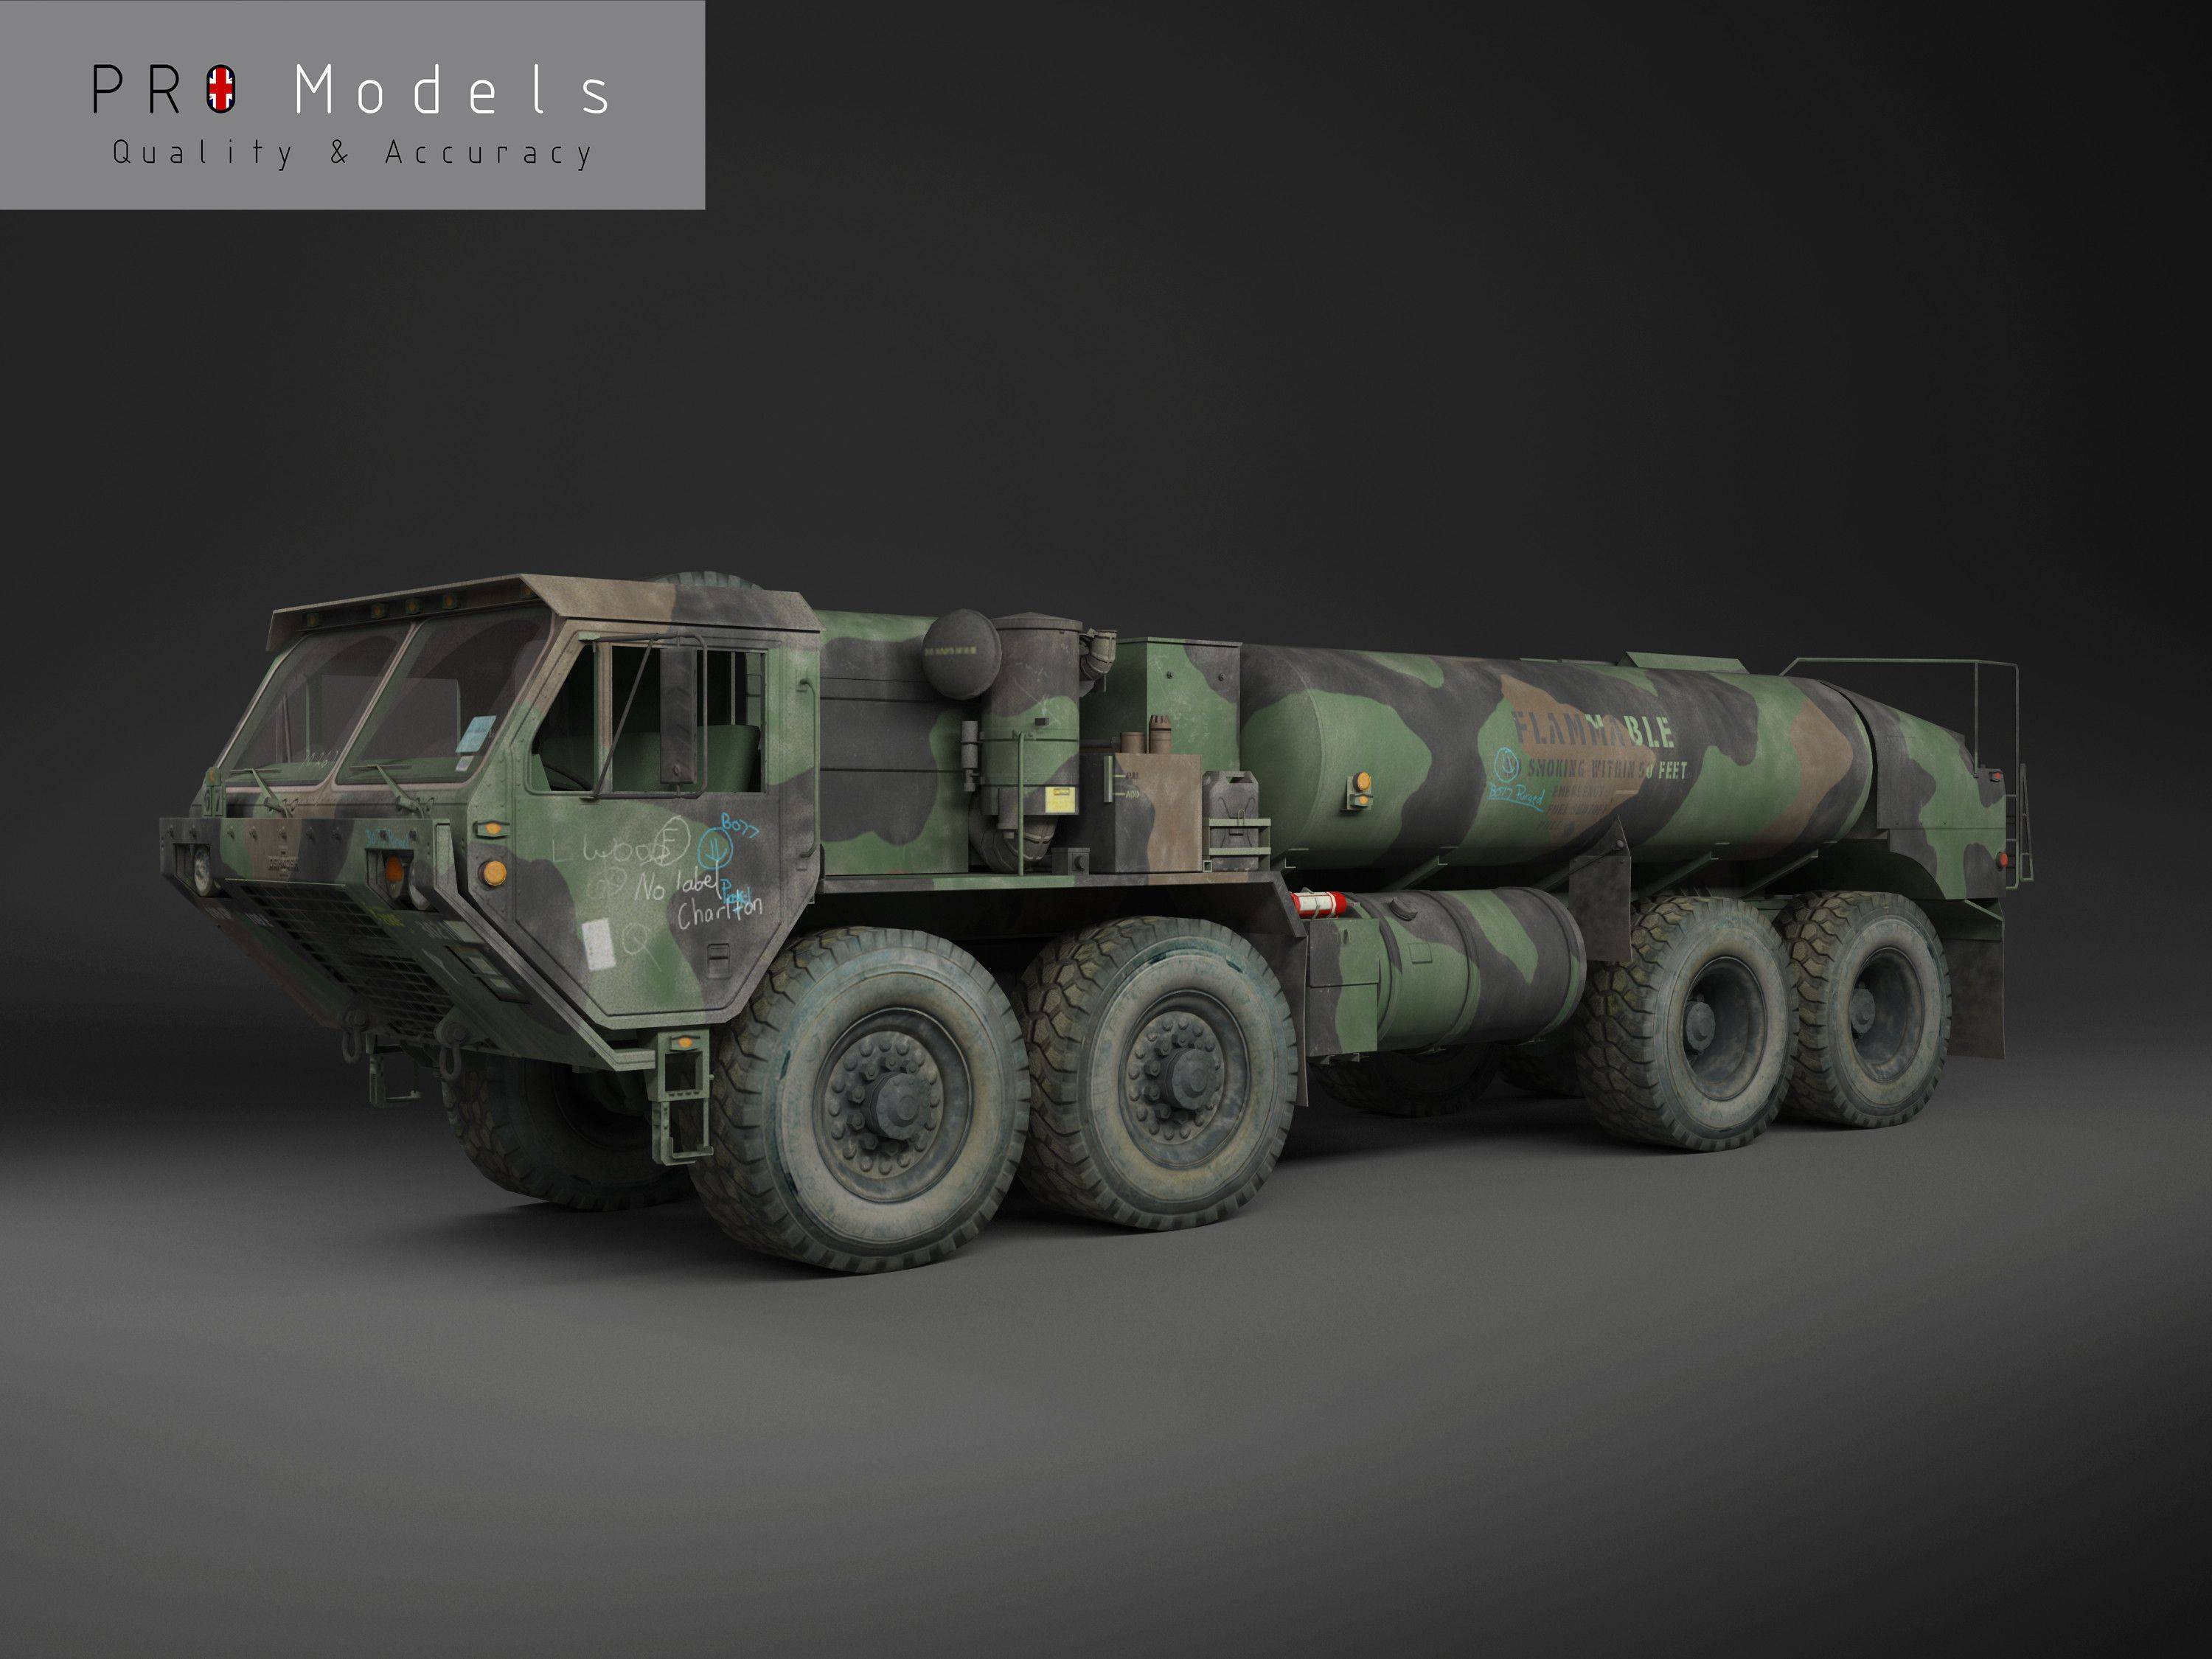 Oshkosh hemtt heavy expanded mobility tactical truck - army technology